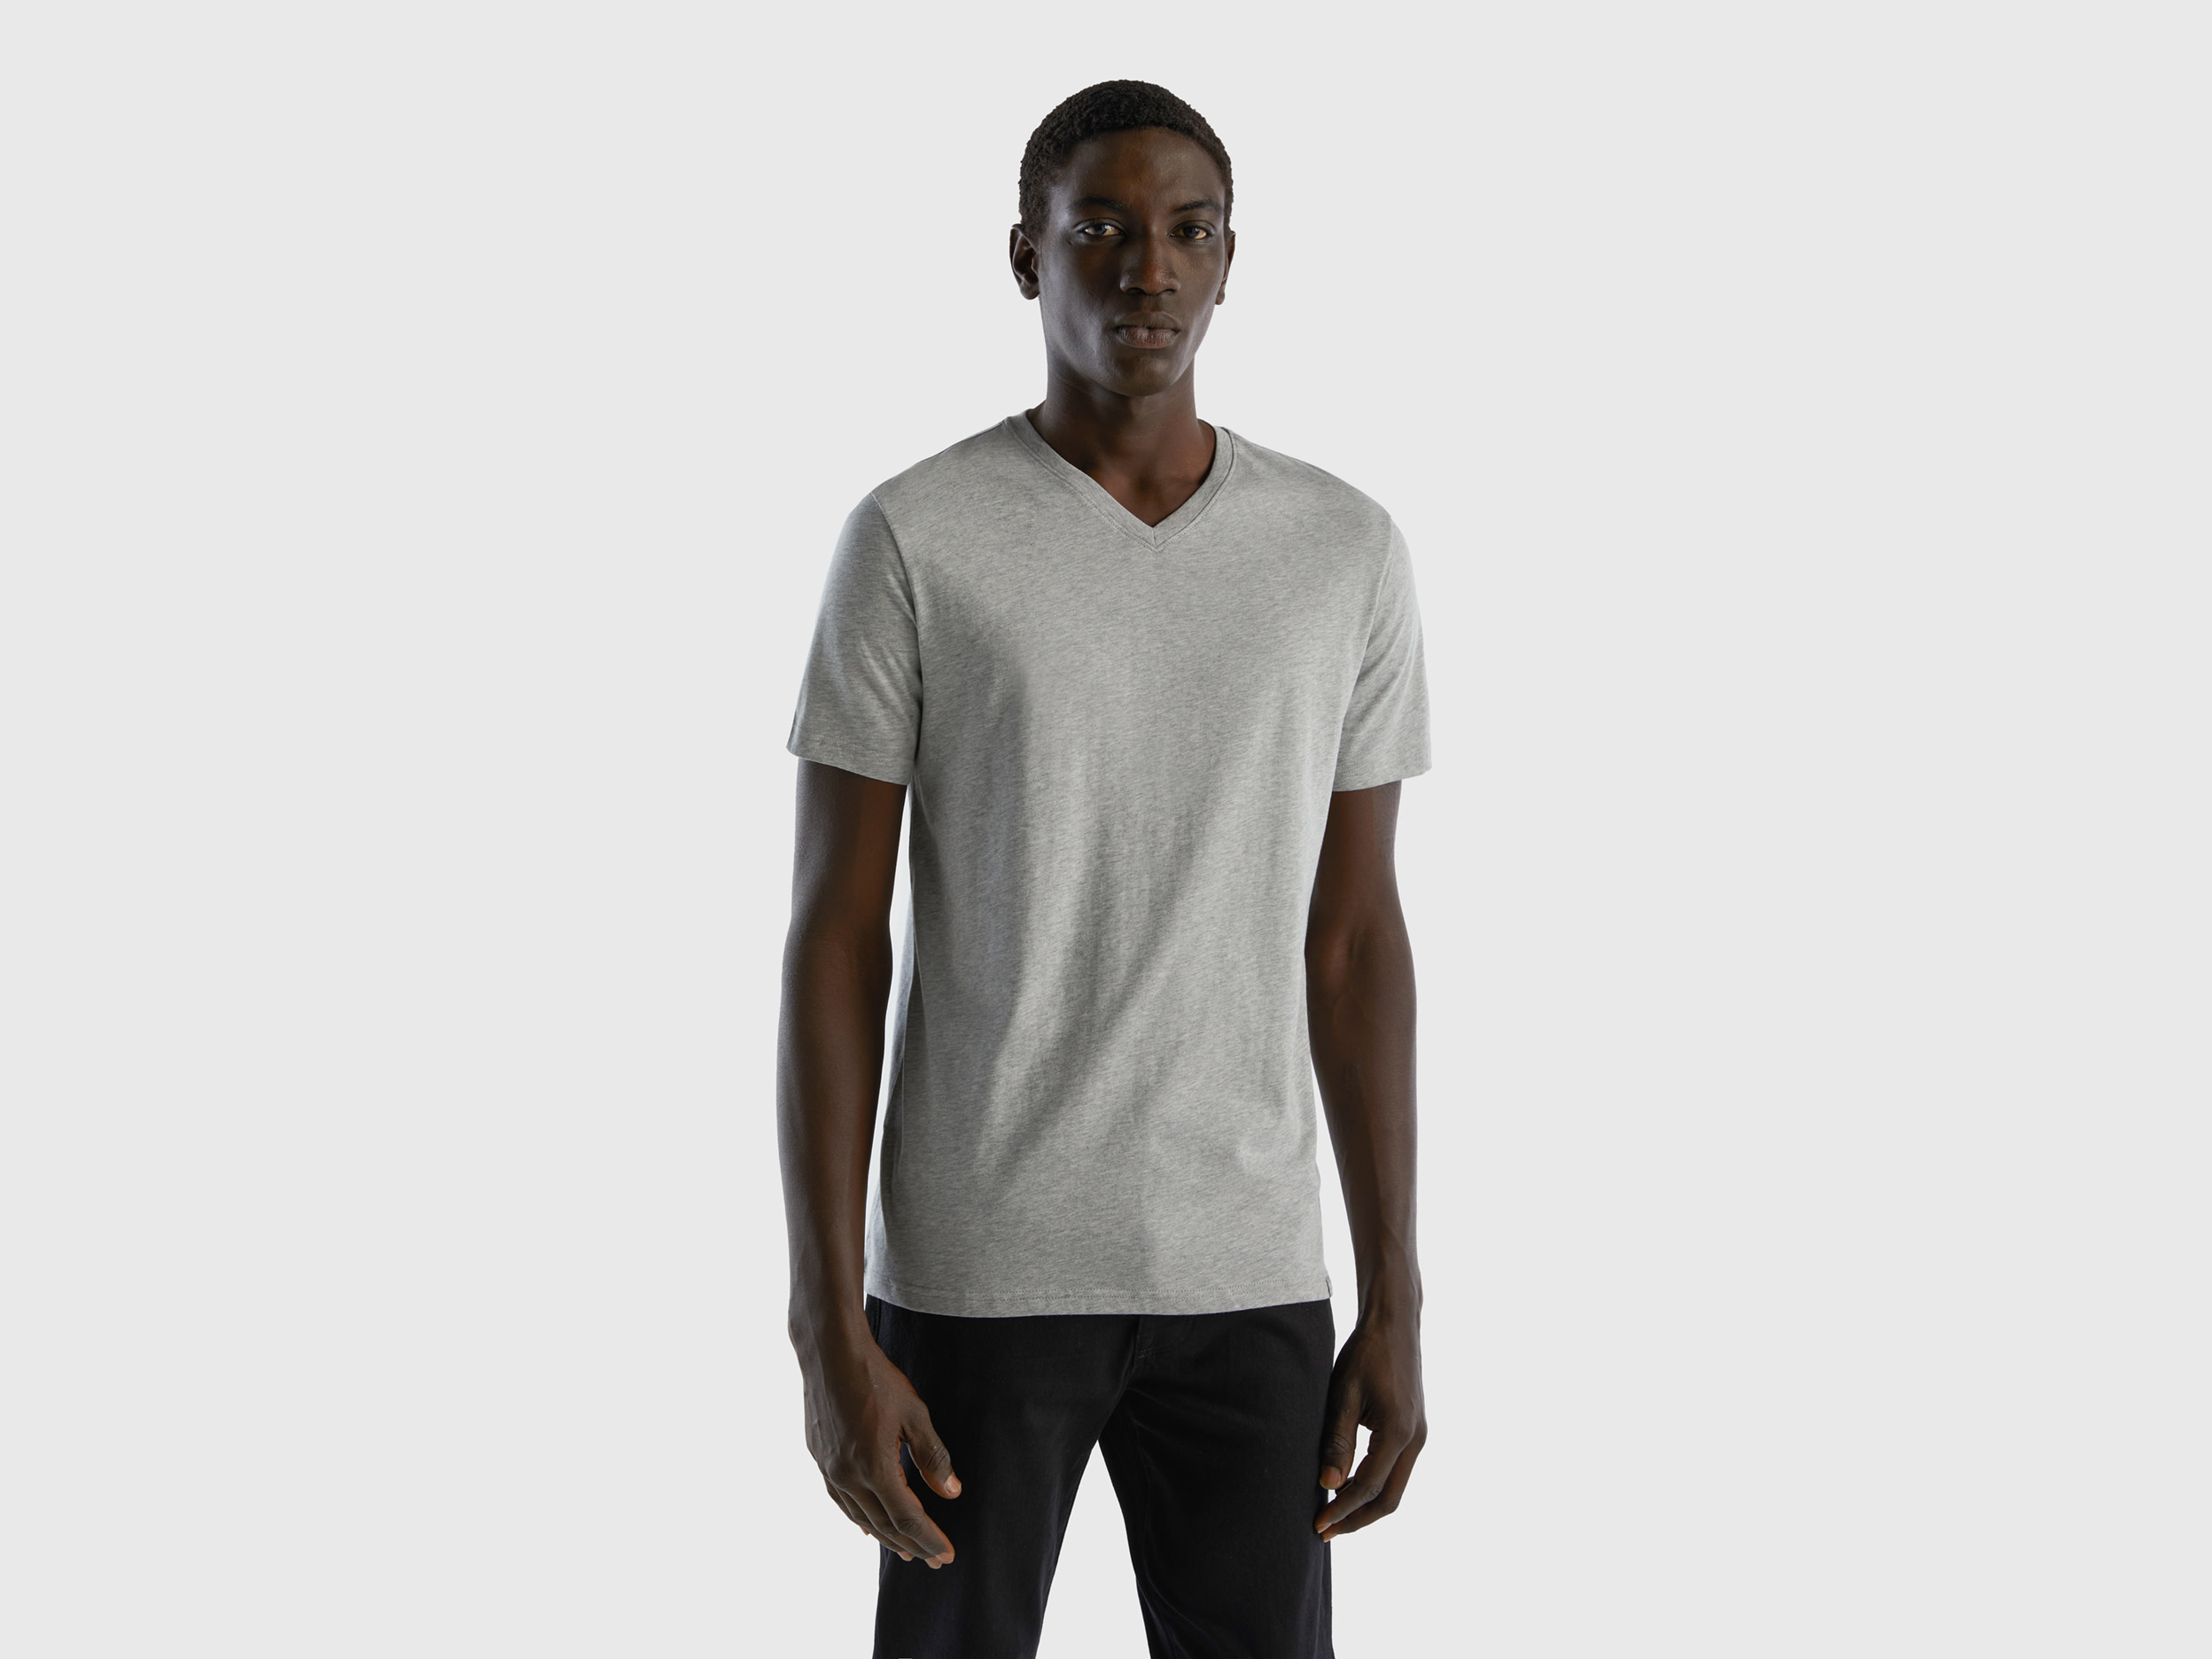 Benetton, T-shirt In Long Fiber Cotton, size L, Light Gray, Men